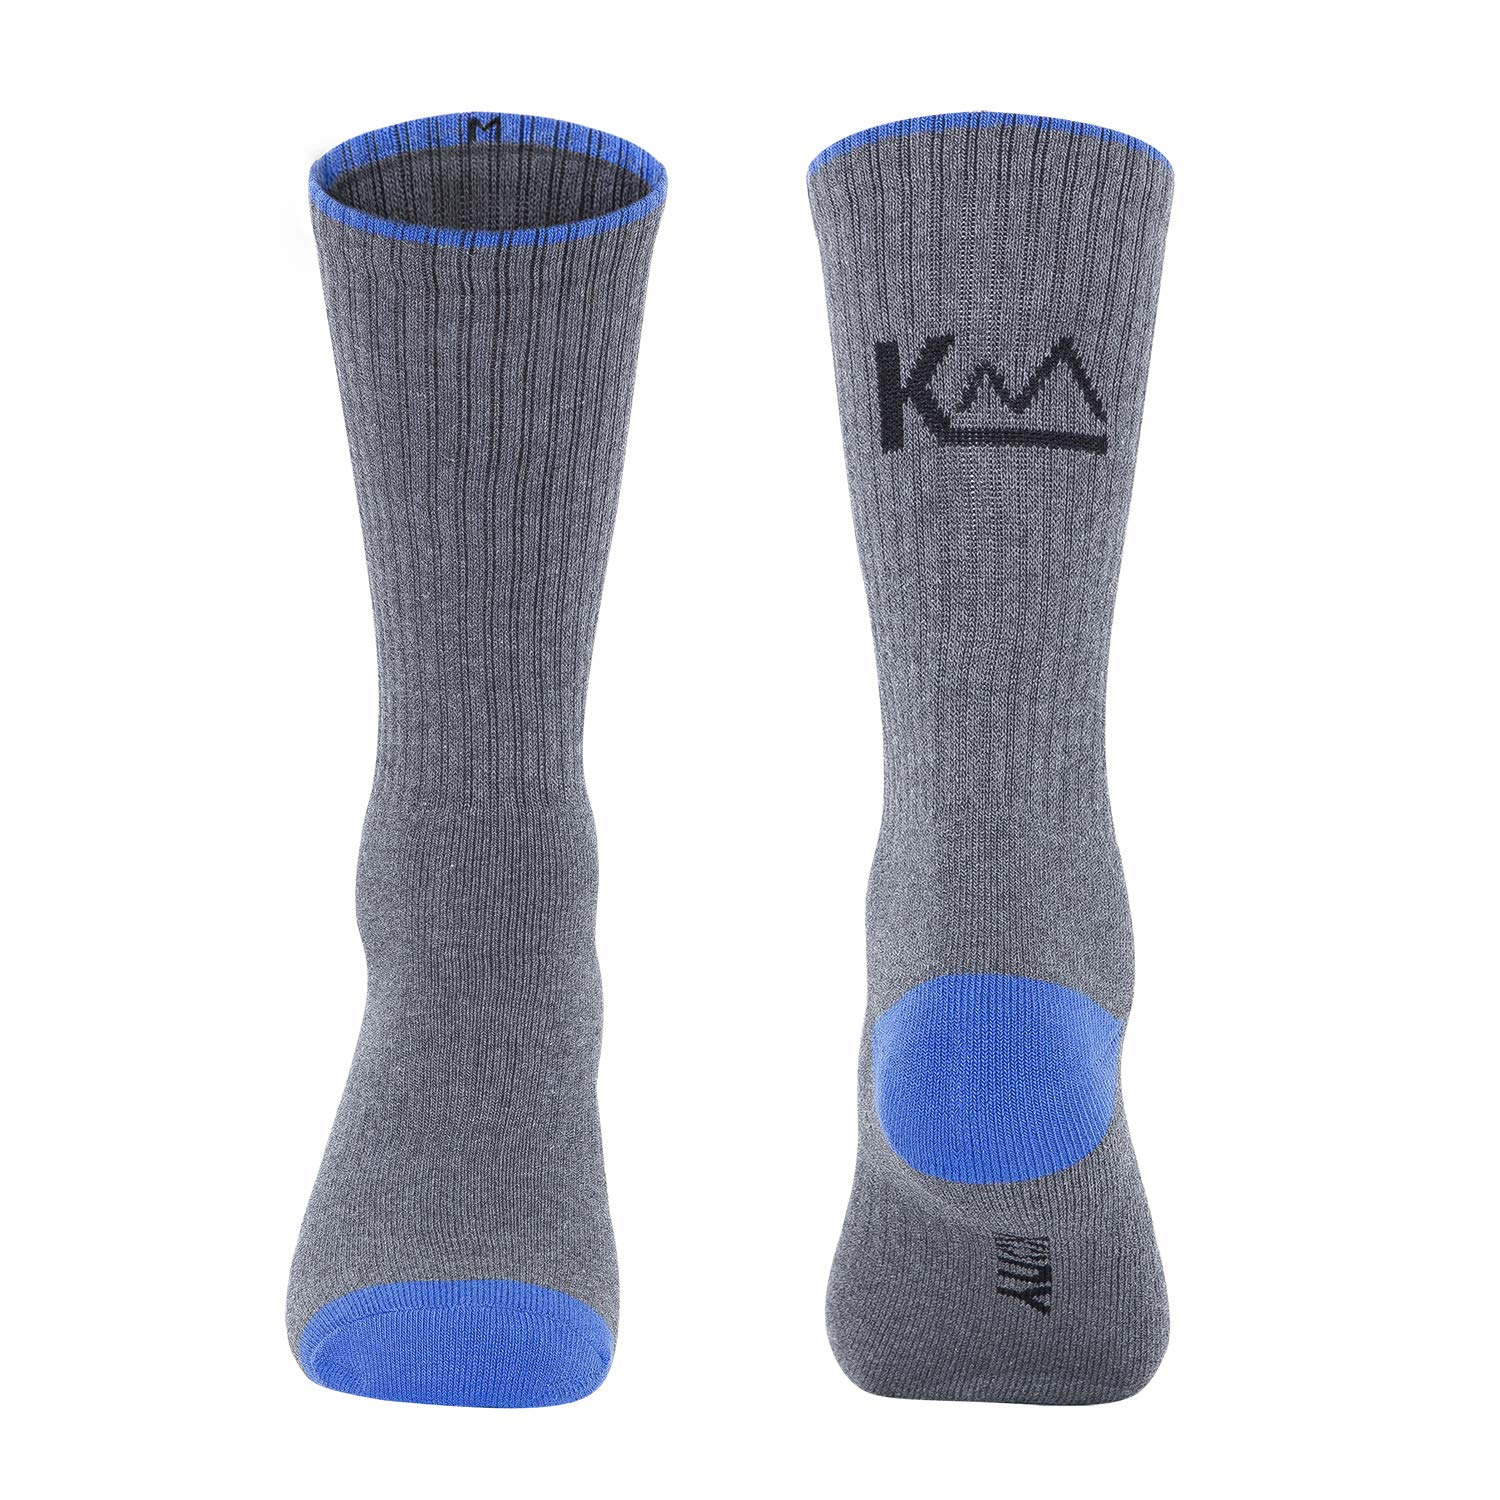 KONY Men's 5 Pairs Thick Cushion Hiking Walking Socks, Wicking Outdoor Sports Crew Socks (Mix-2, Medium(US Shoe Size 8-11))